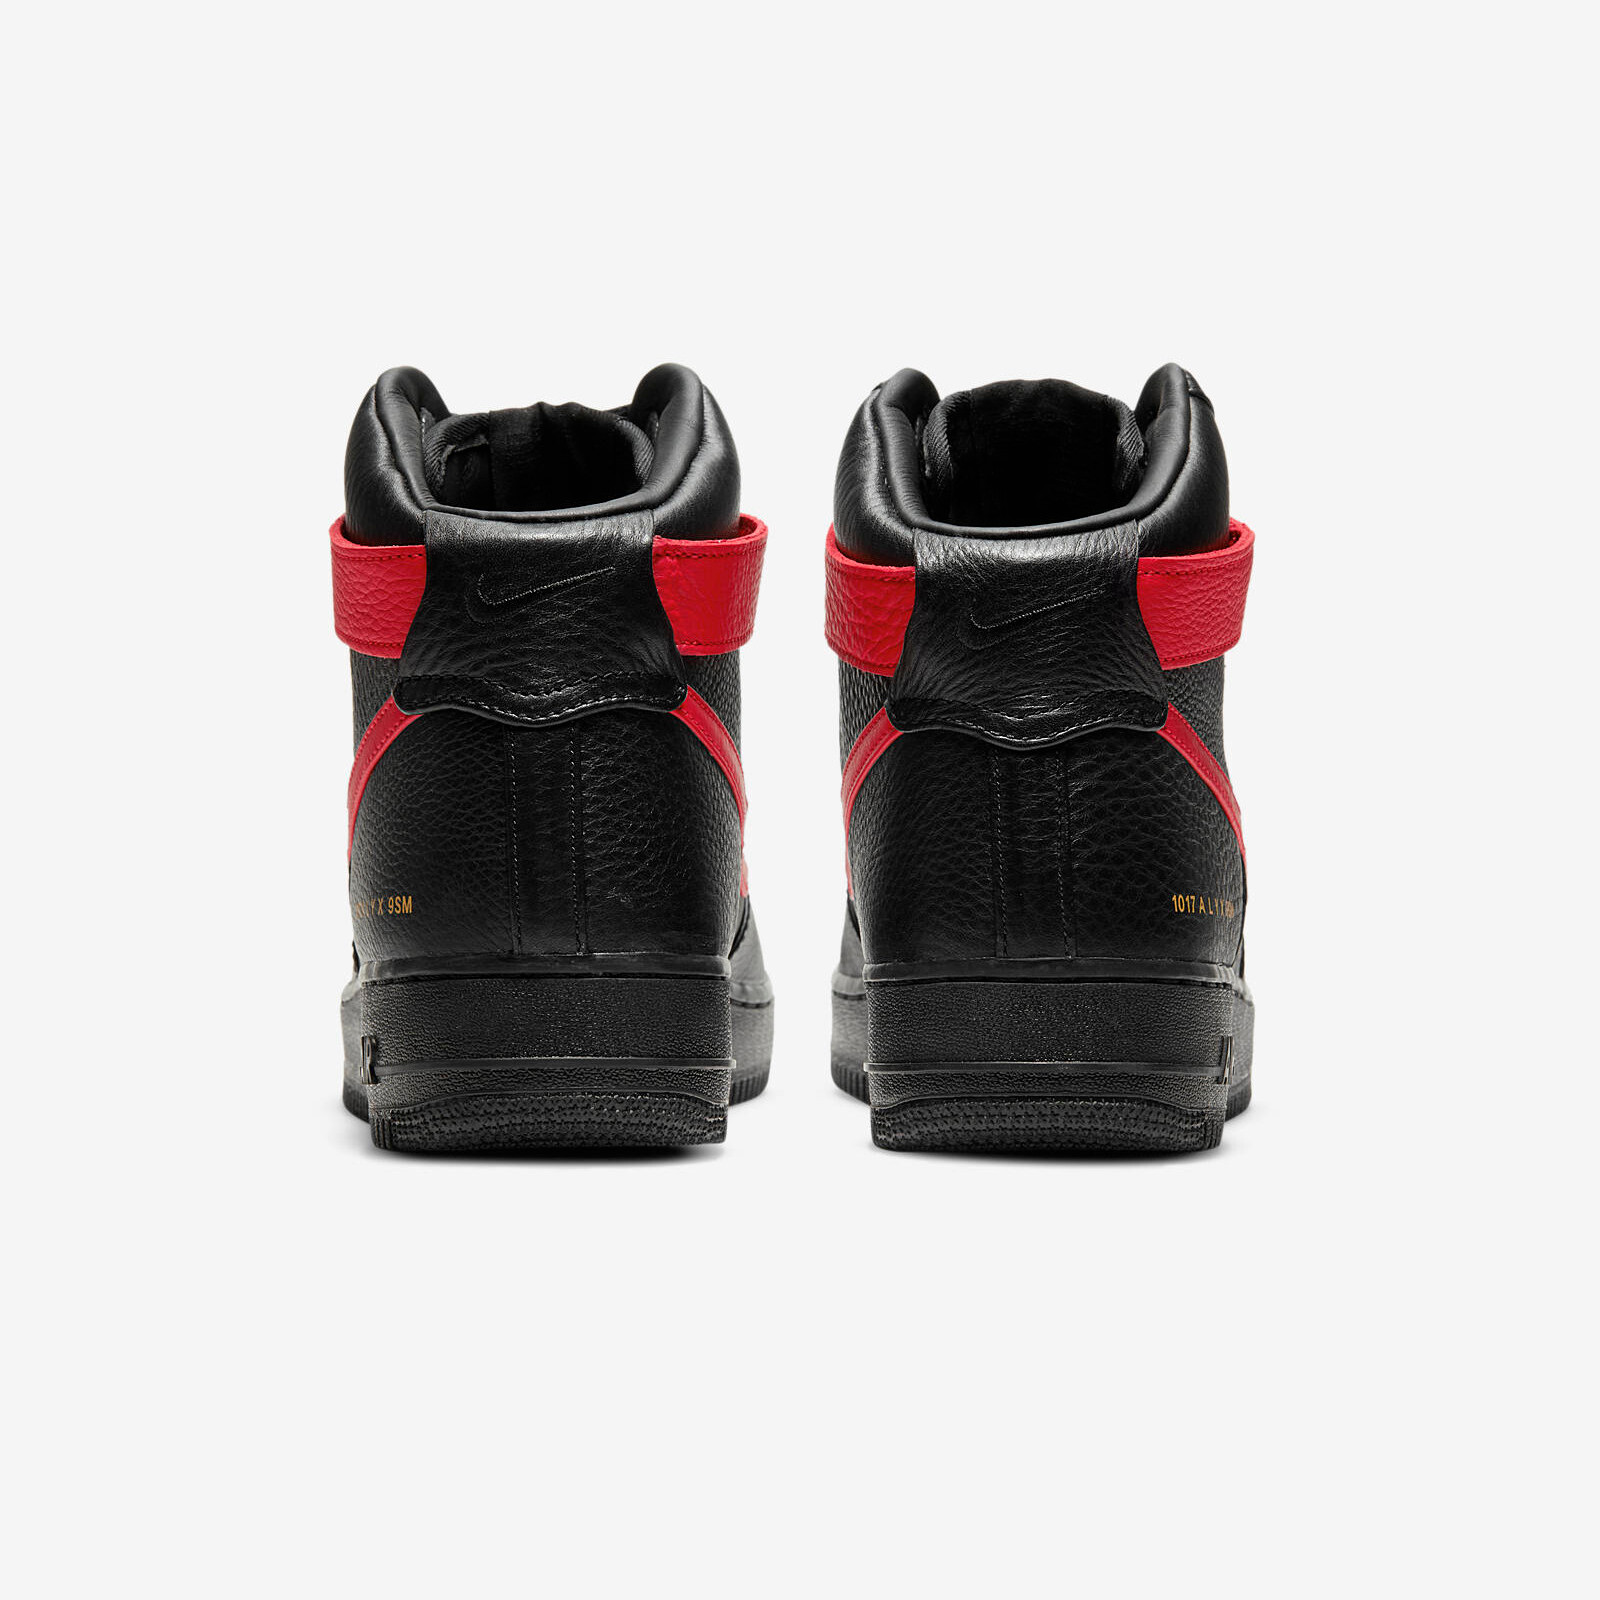 Alyx x Nike
Air Force 1 High
Black / Red